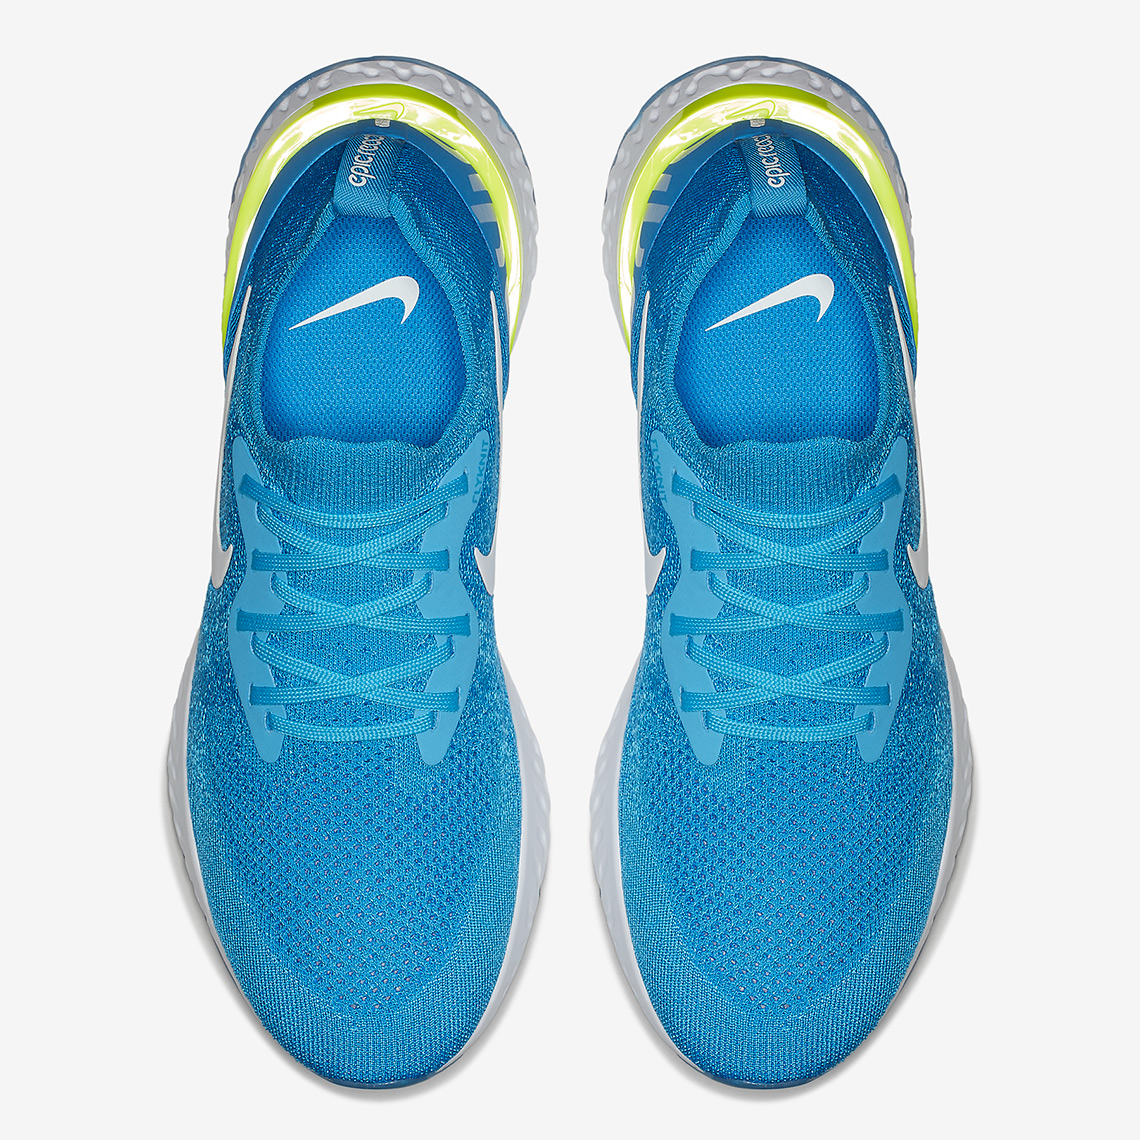 Nike Epic React Flyknit "Volt Glow" Release Info SneakerNews.com